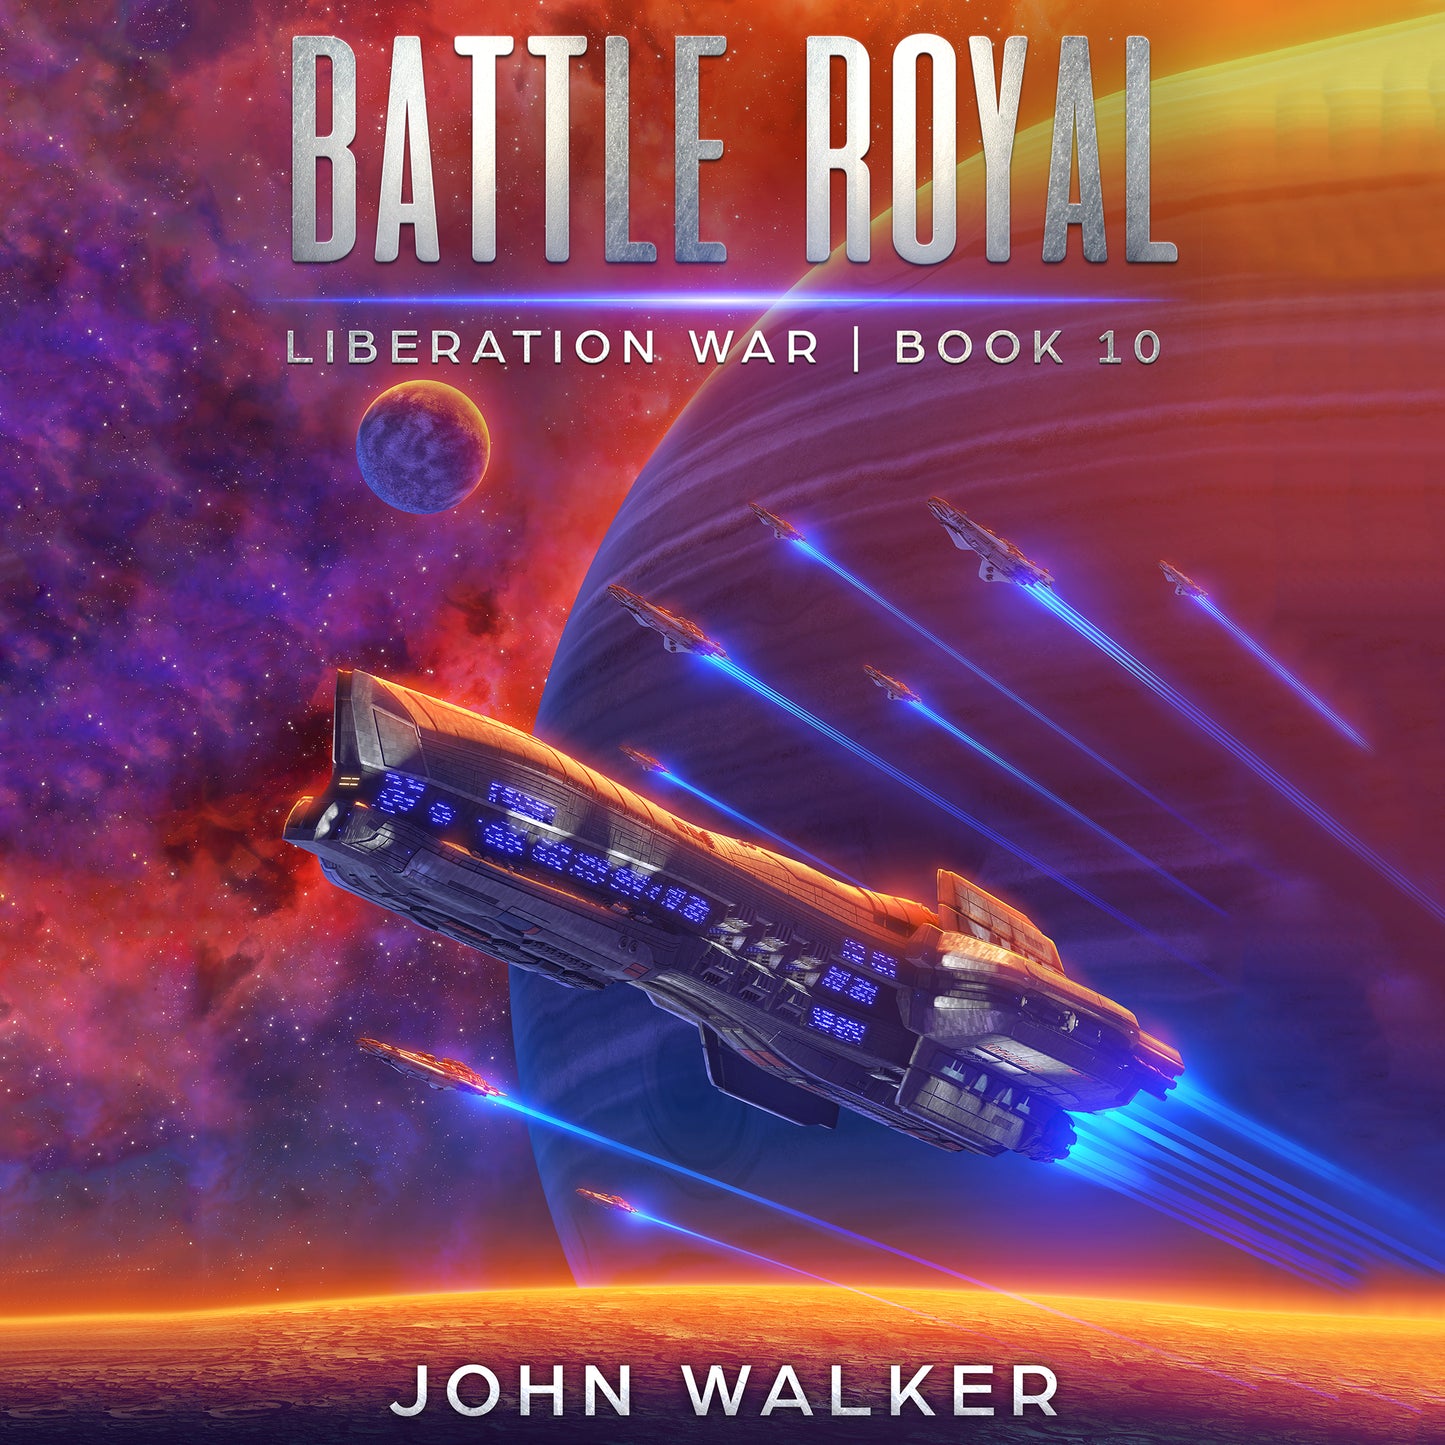 Battle Royal: Liberation War Book 10 Audiobook